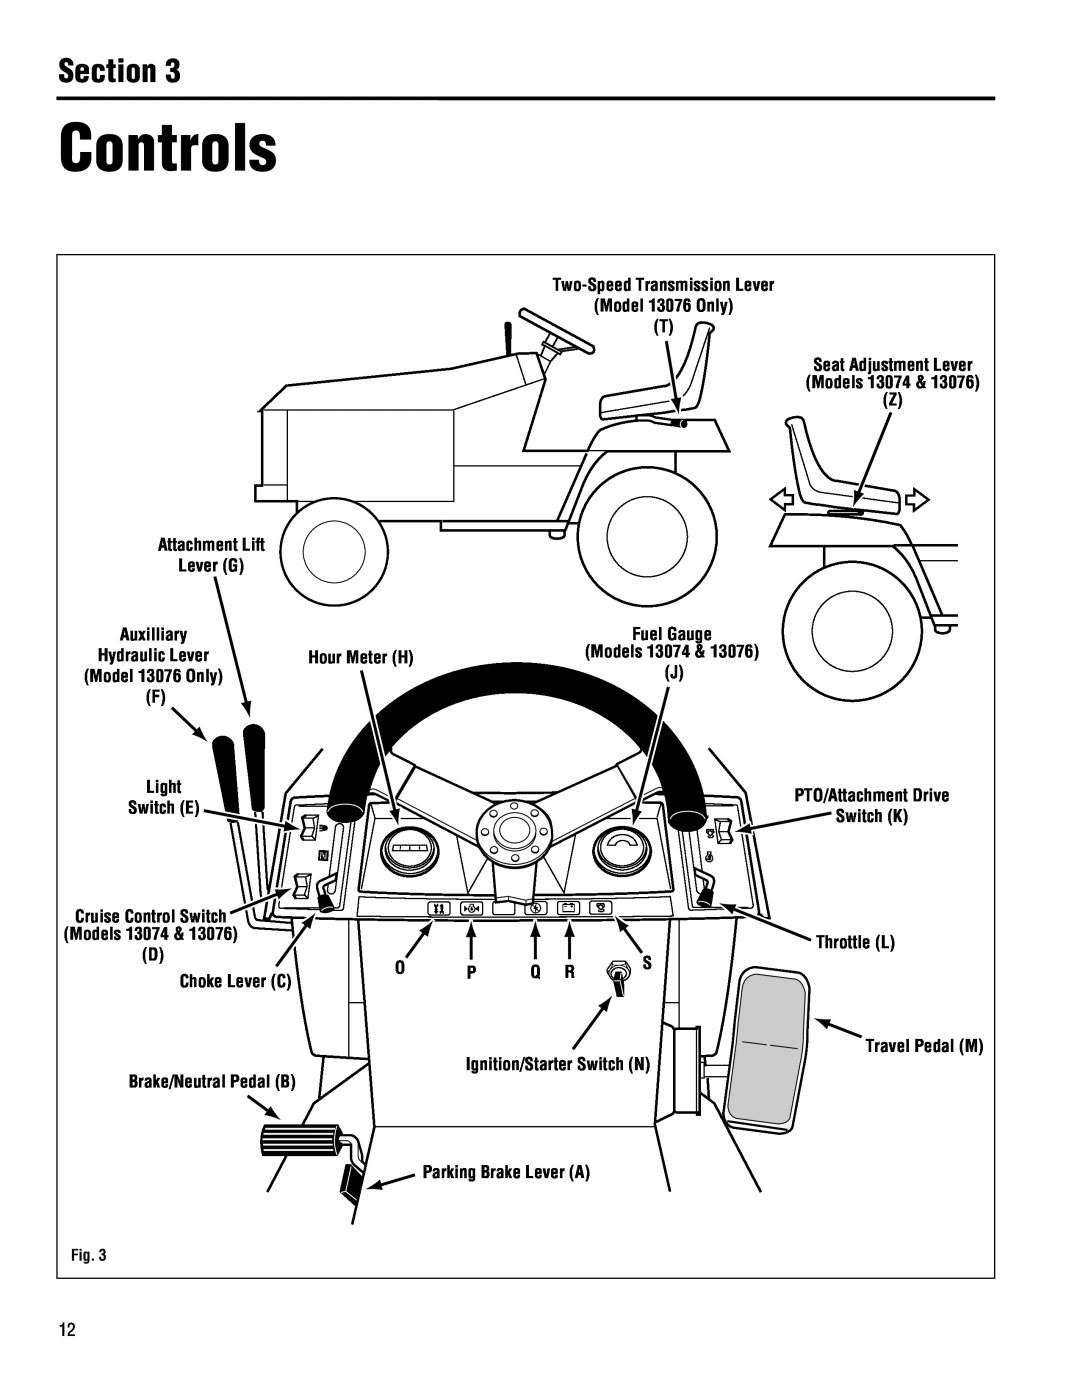 Troy-Bilt 13101-GTX 16, 13101 - GTX 16 Controls, Throttle L, Ignition/Starter Switch N, Parking Brake Lever A, Section 